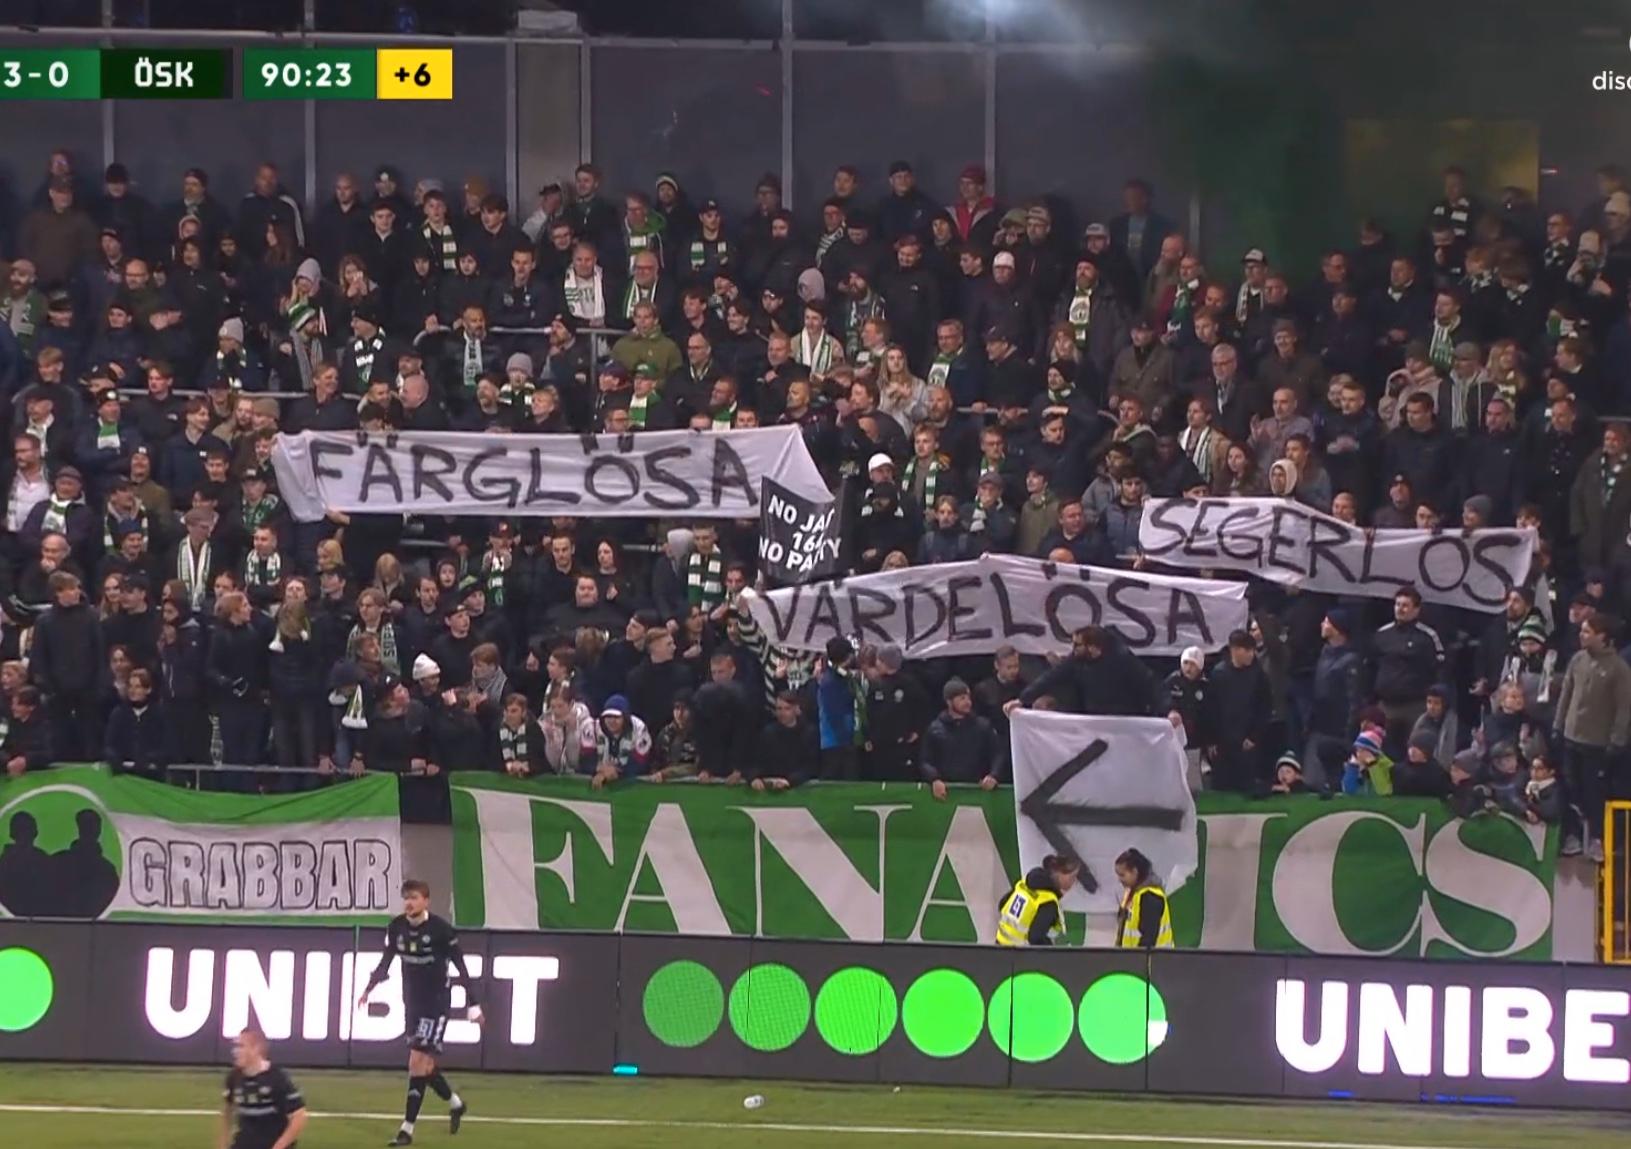 VSK-fansens banderoll.